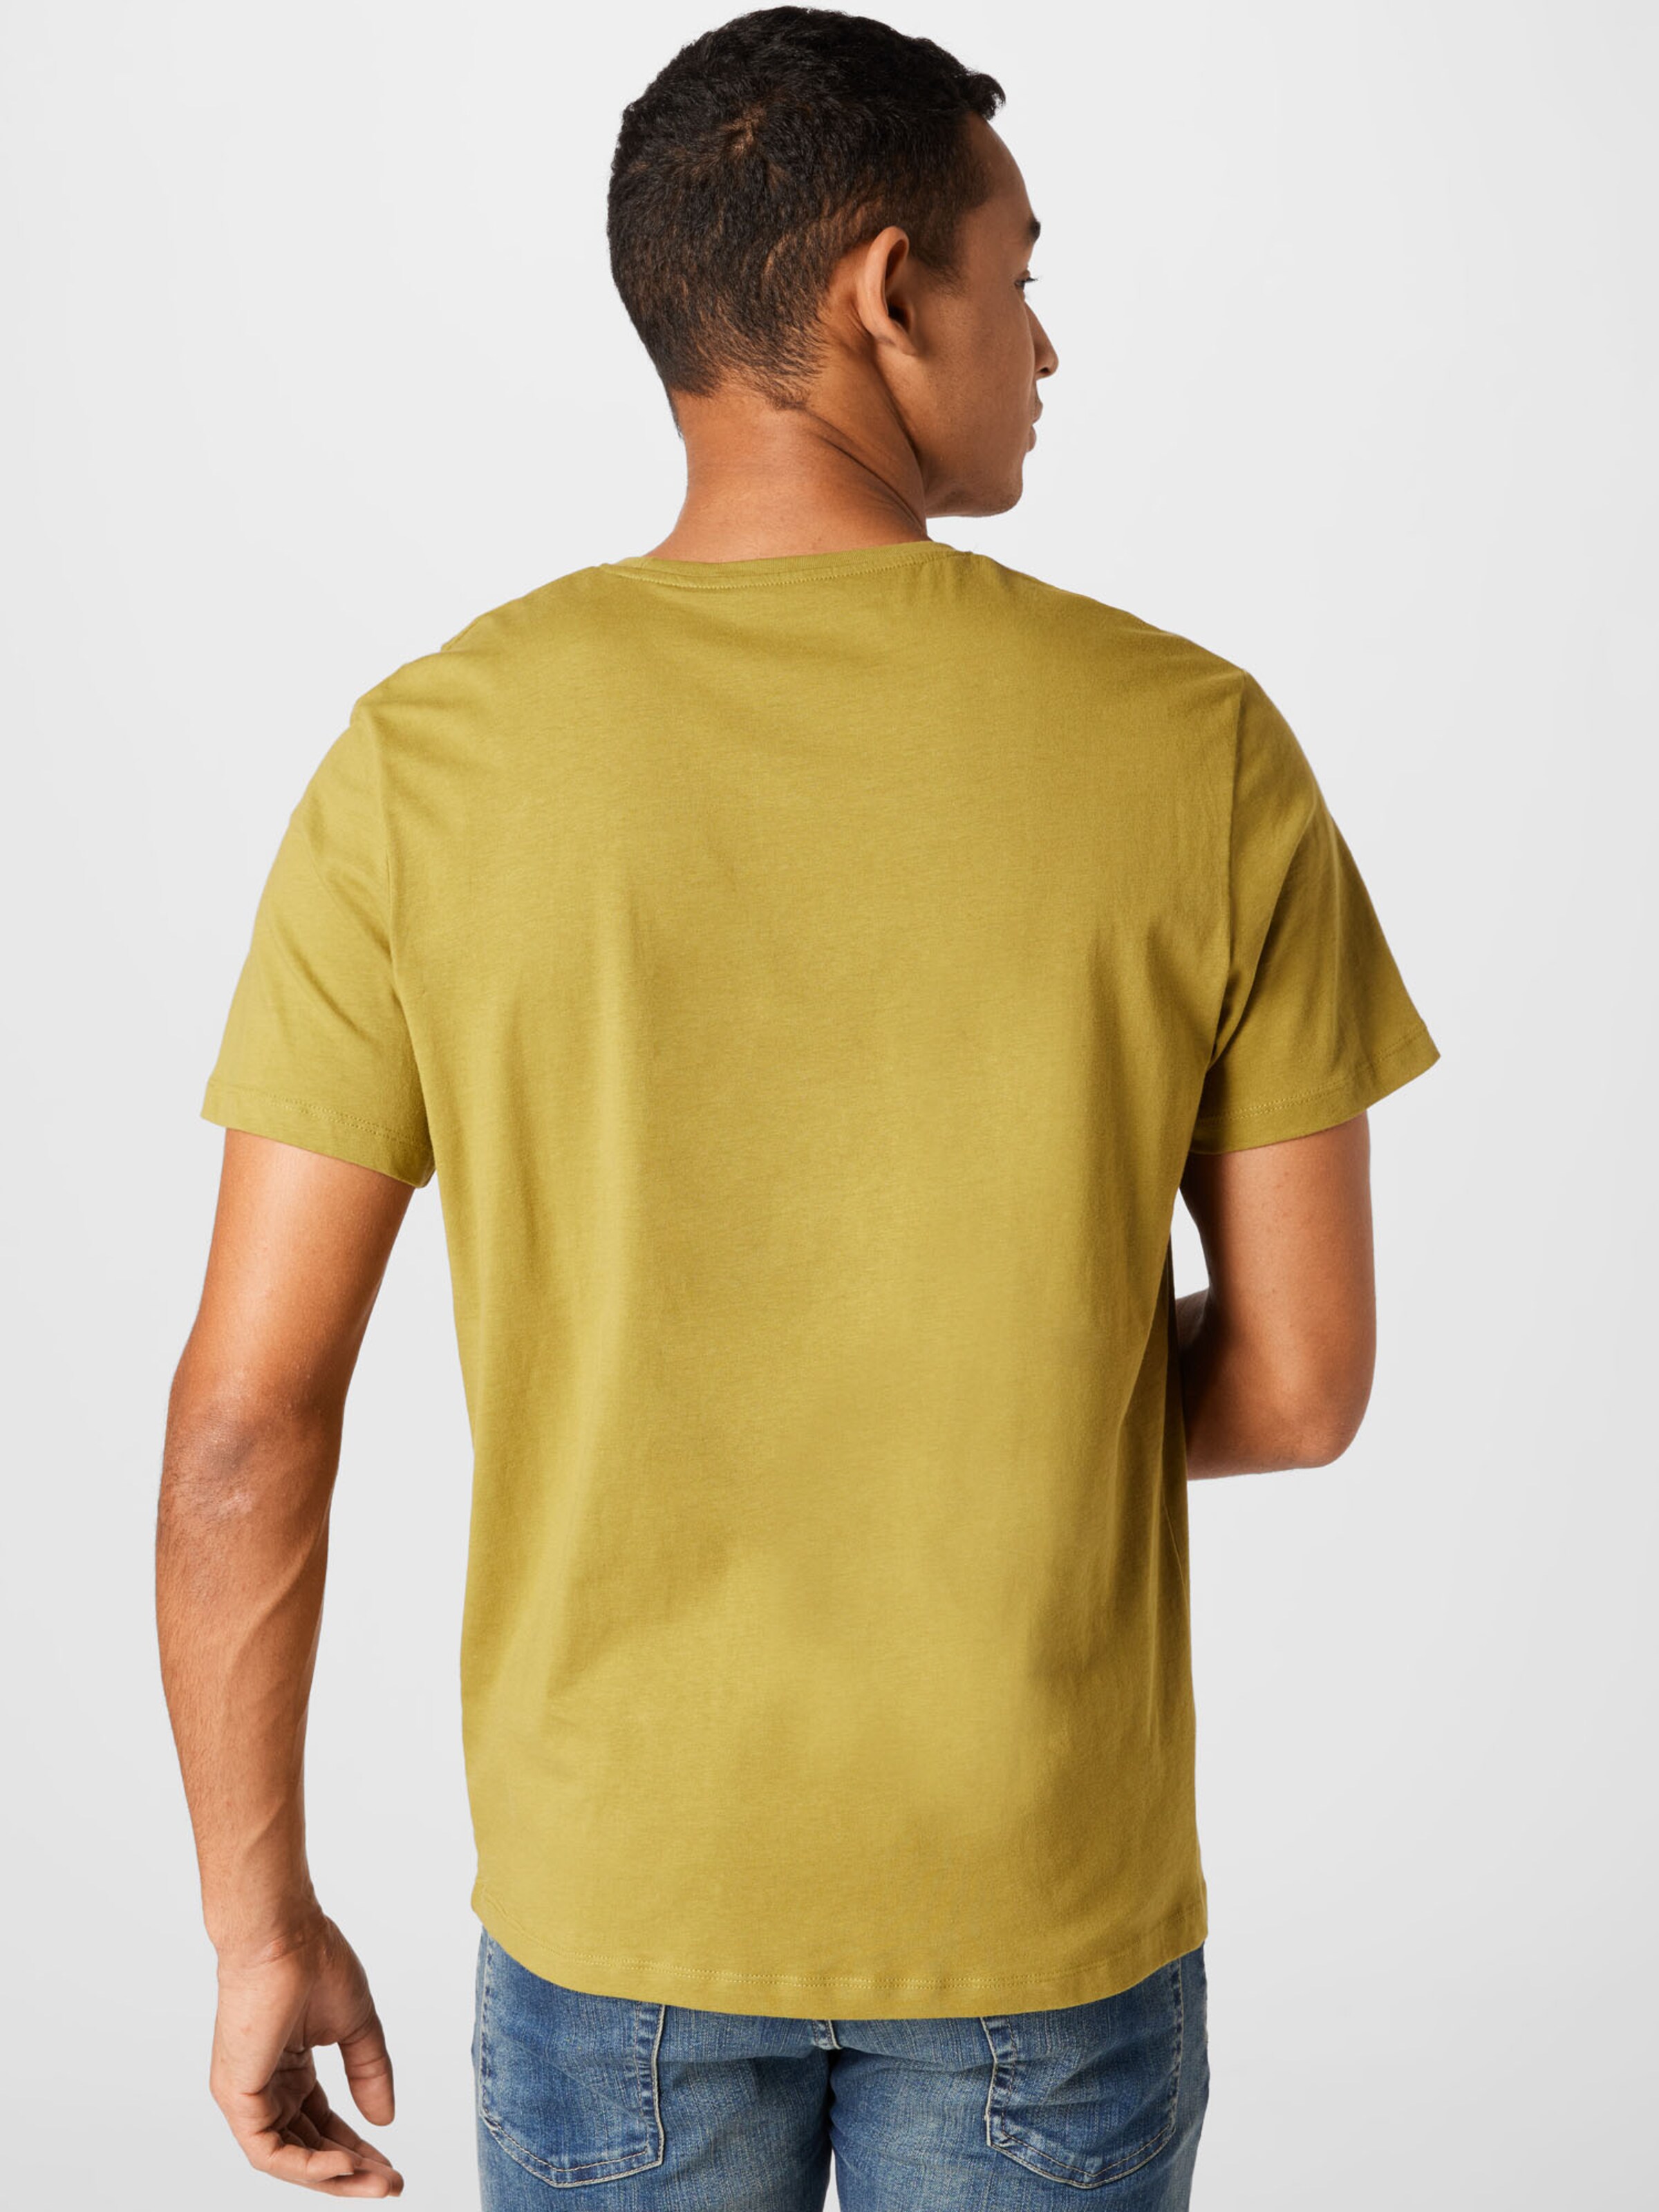 Männer Große Größen TOM TAILOR T-Shirt in Khaki - EU59844